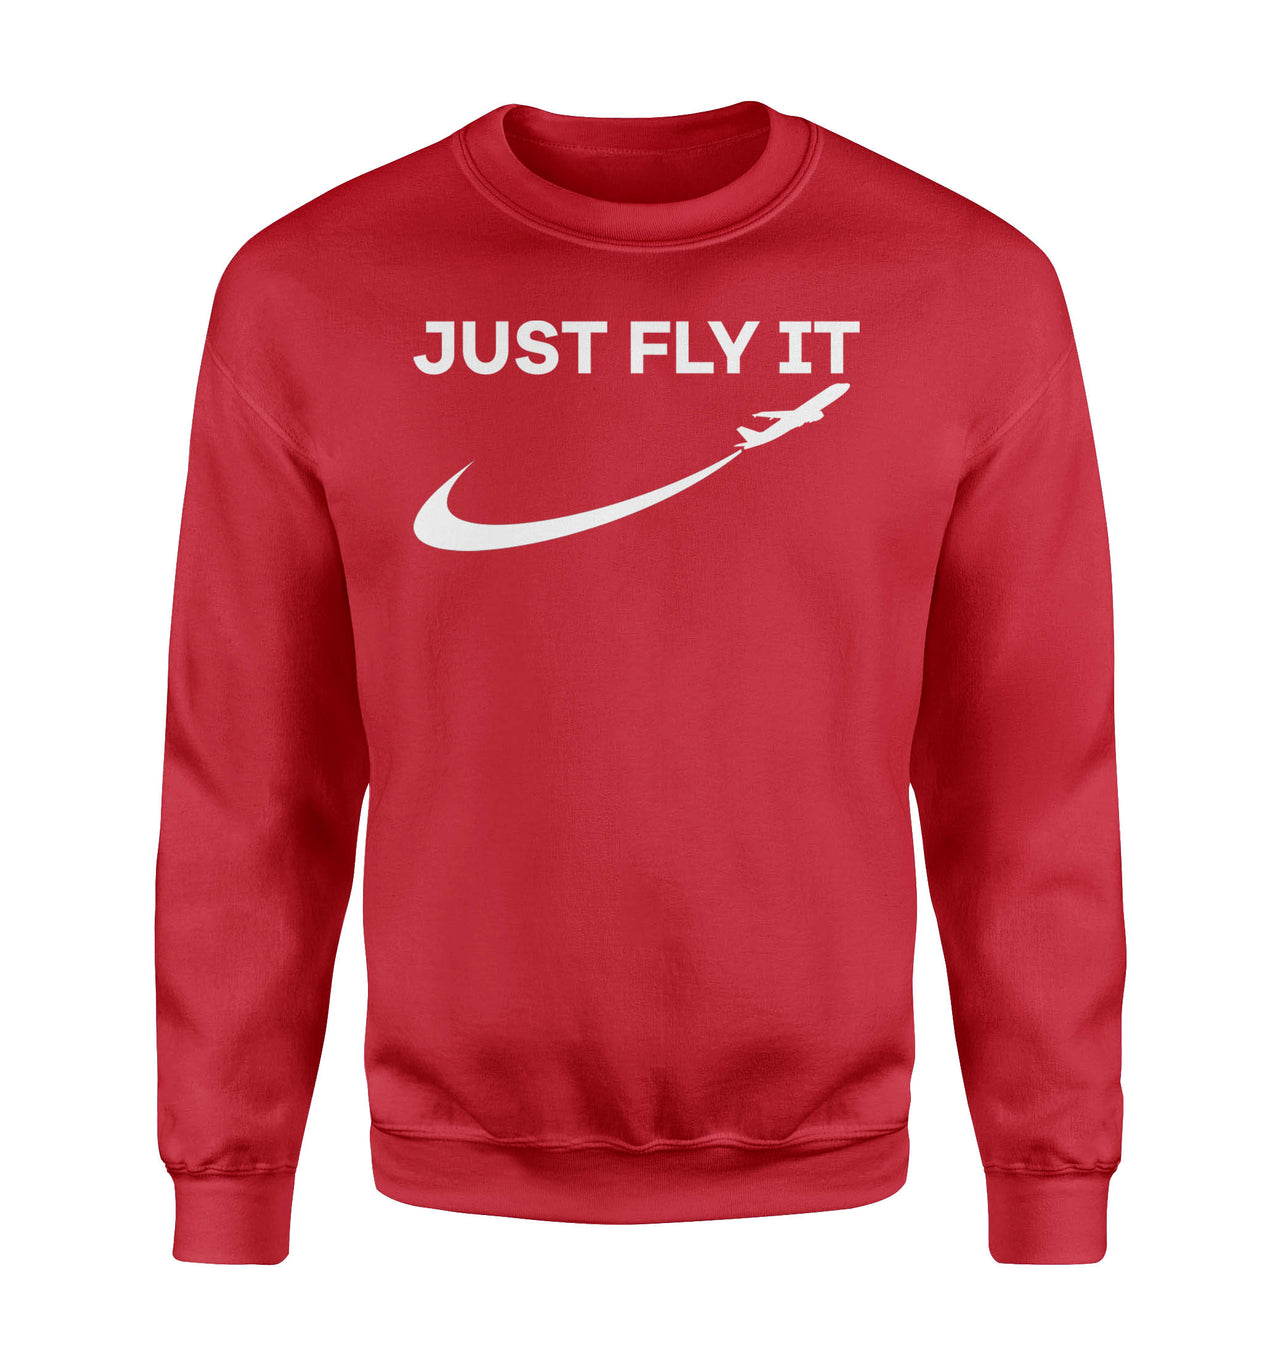 Just Fly It 2 Designed Sweatshirts